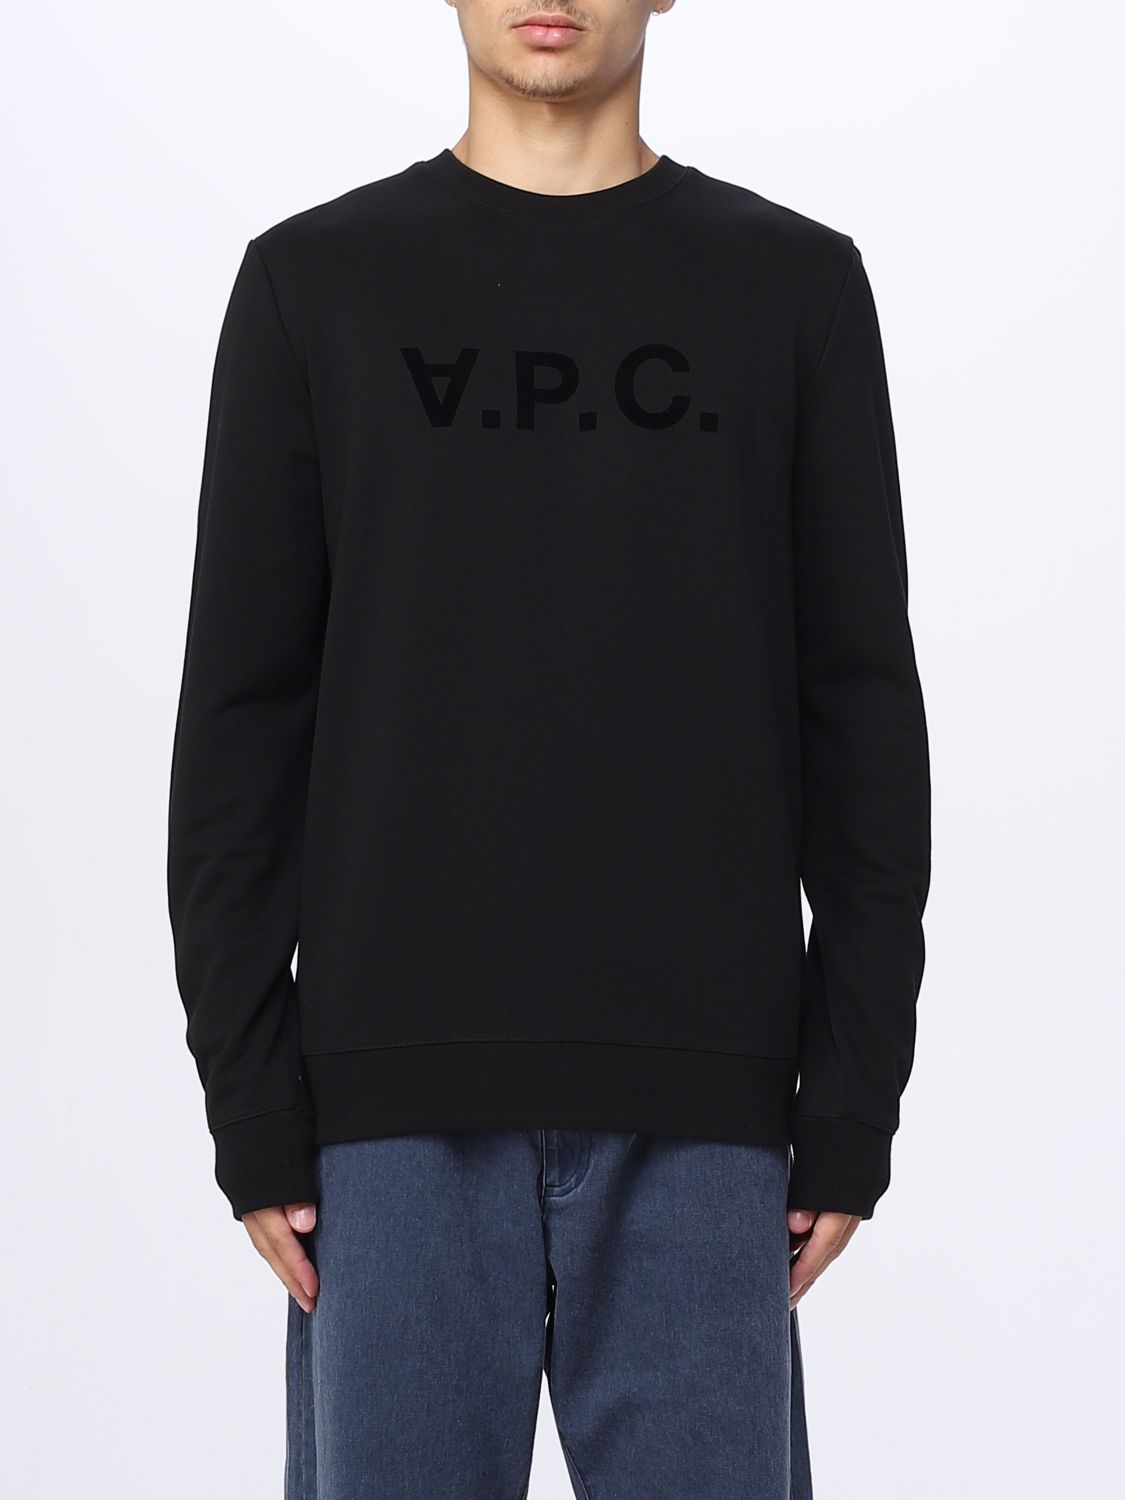 Shop Apc Sweatshirt A.p.c. Men Color Black